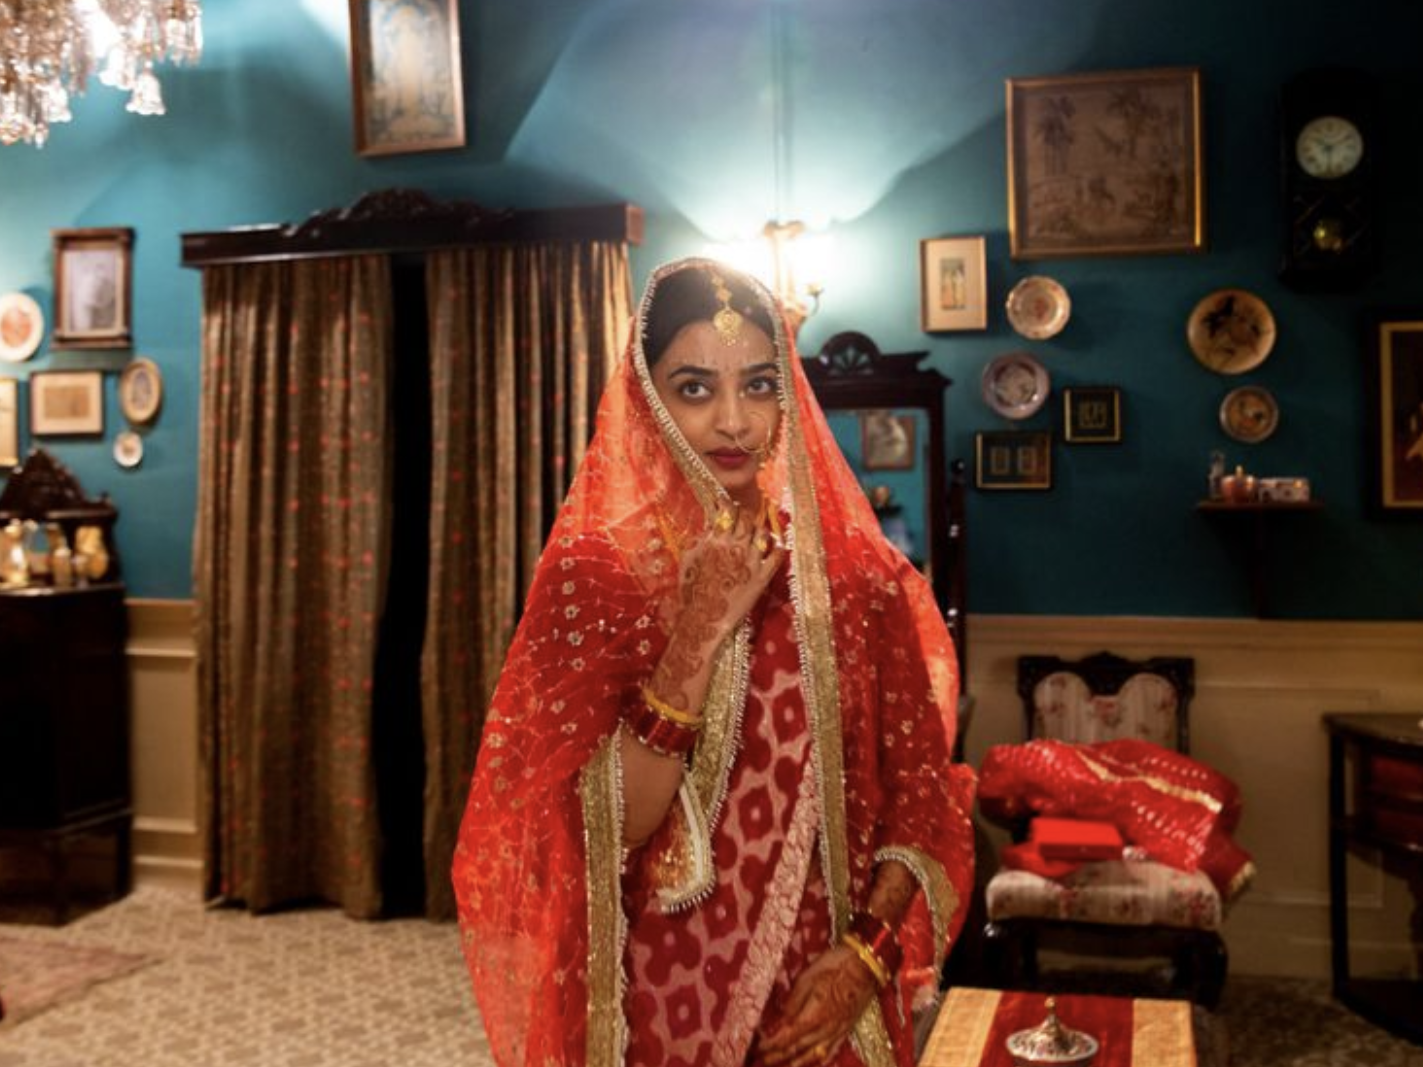 Radhika Apte as Radha in 'Raat Akeli Hai' 